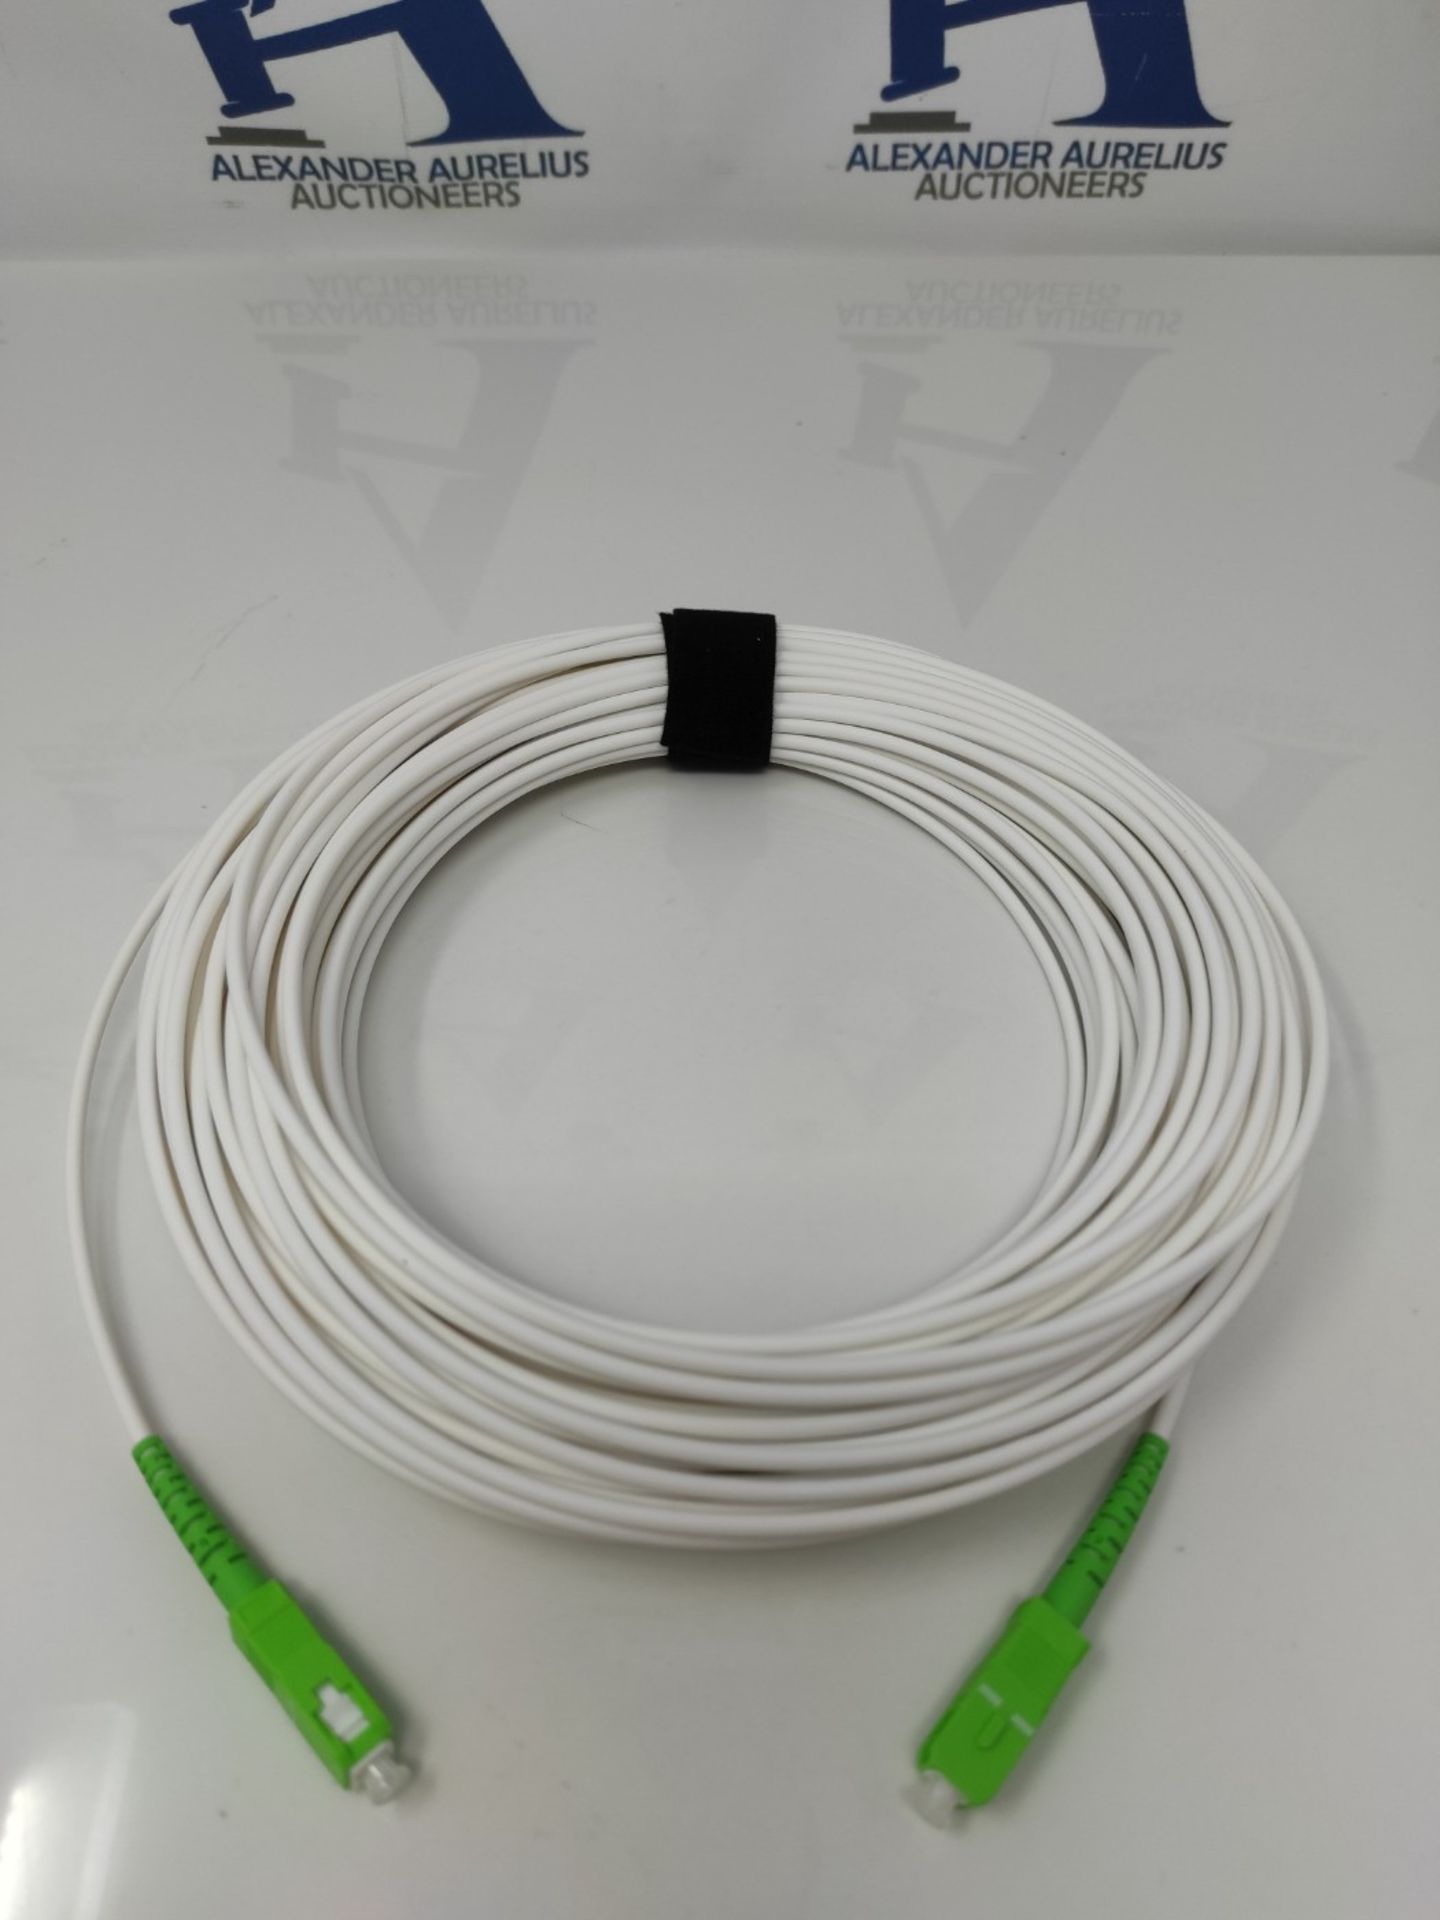 Elfcam - 25m Fiber Optic Cable for Orange Livebox, SFR Red Box and Bouygues Telecom Bb - Image 2 of 3